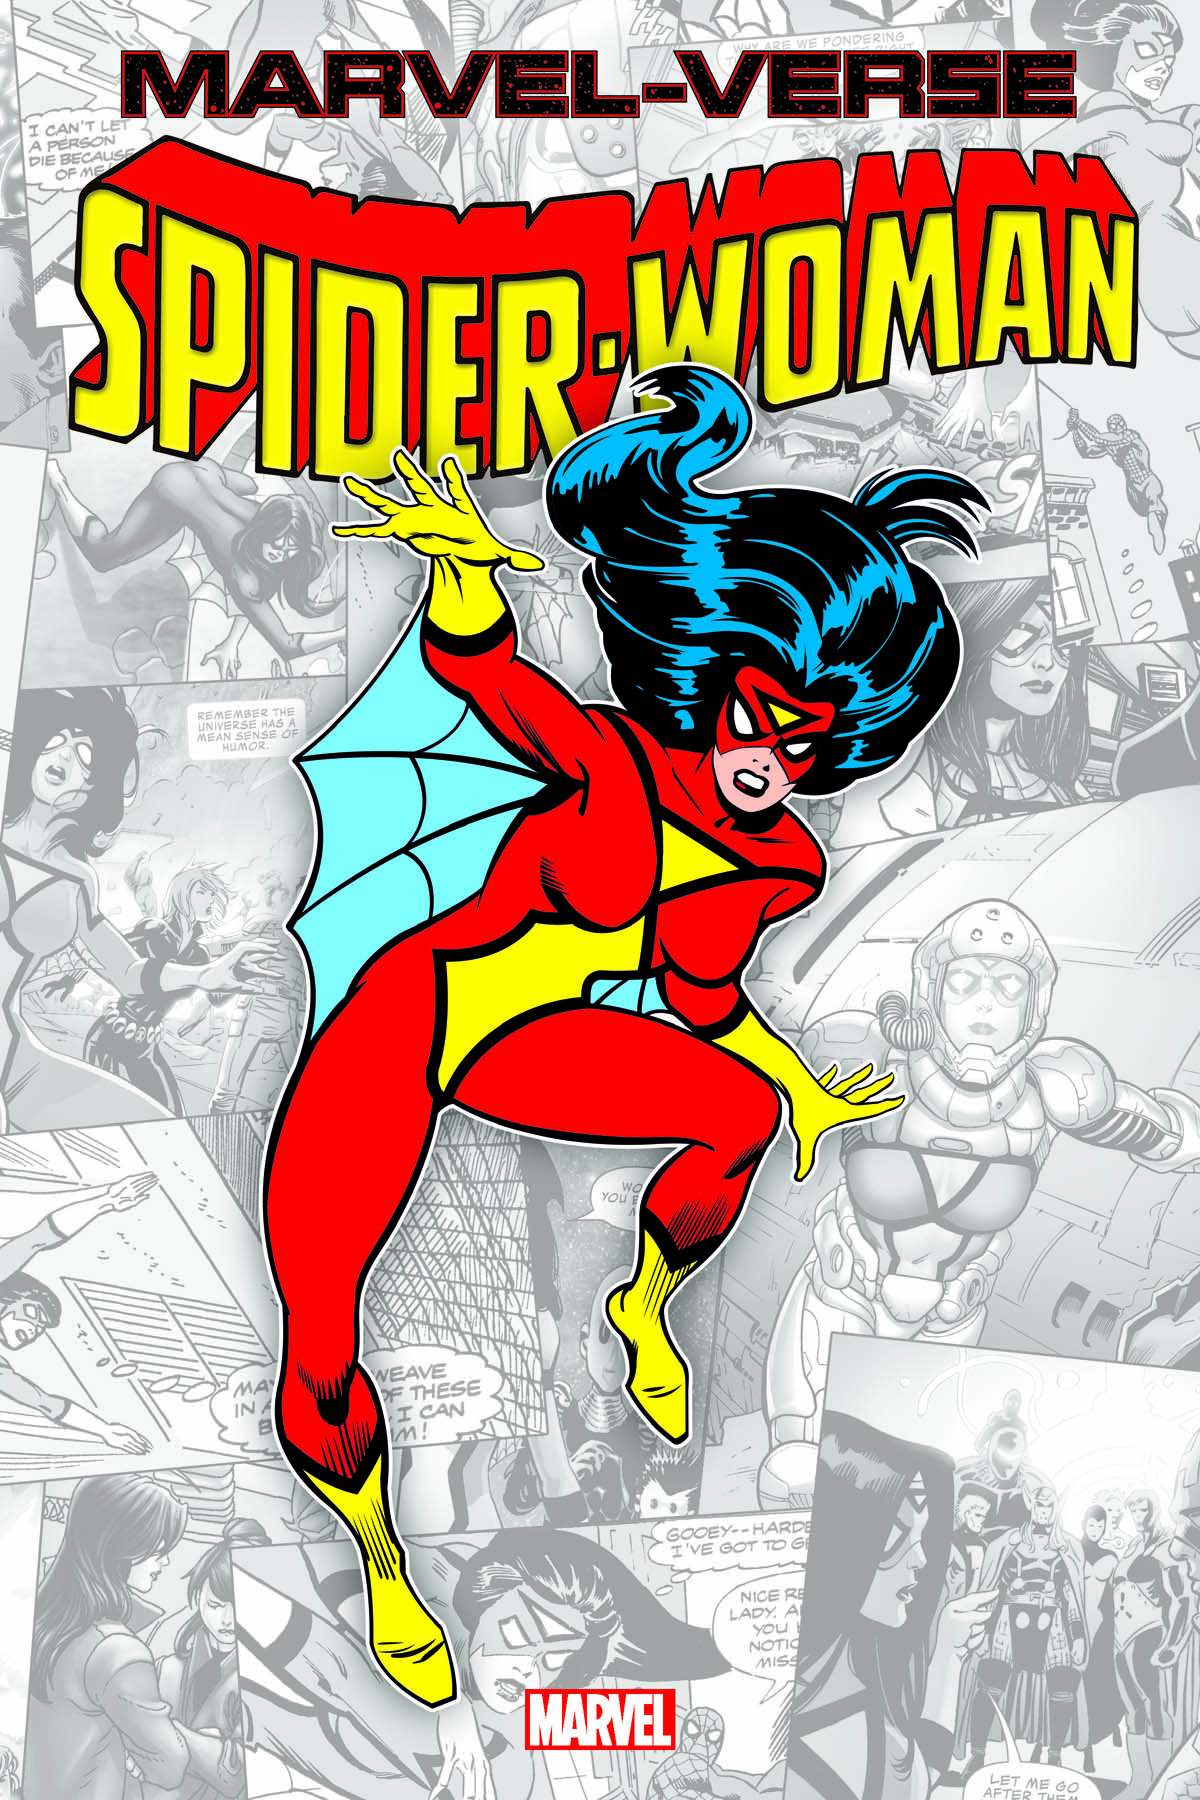 Marvel-Verse: Spider-Woman (Trade Paperback)